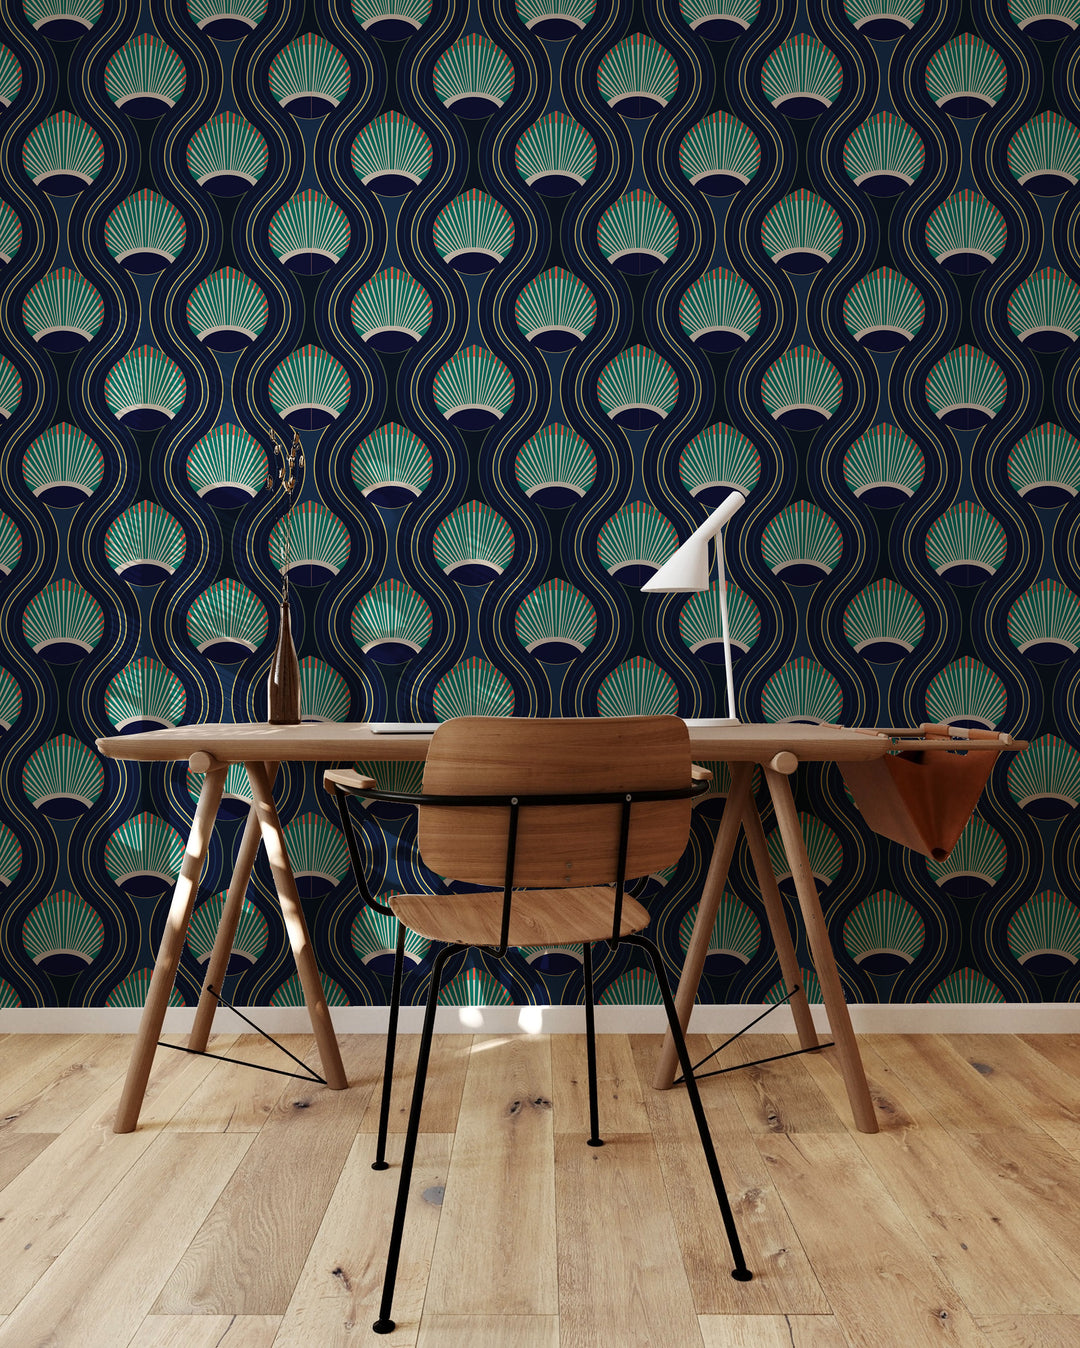 African Art Deco Shell - Blue Wallpaper by Julianne Taylor Style